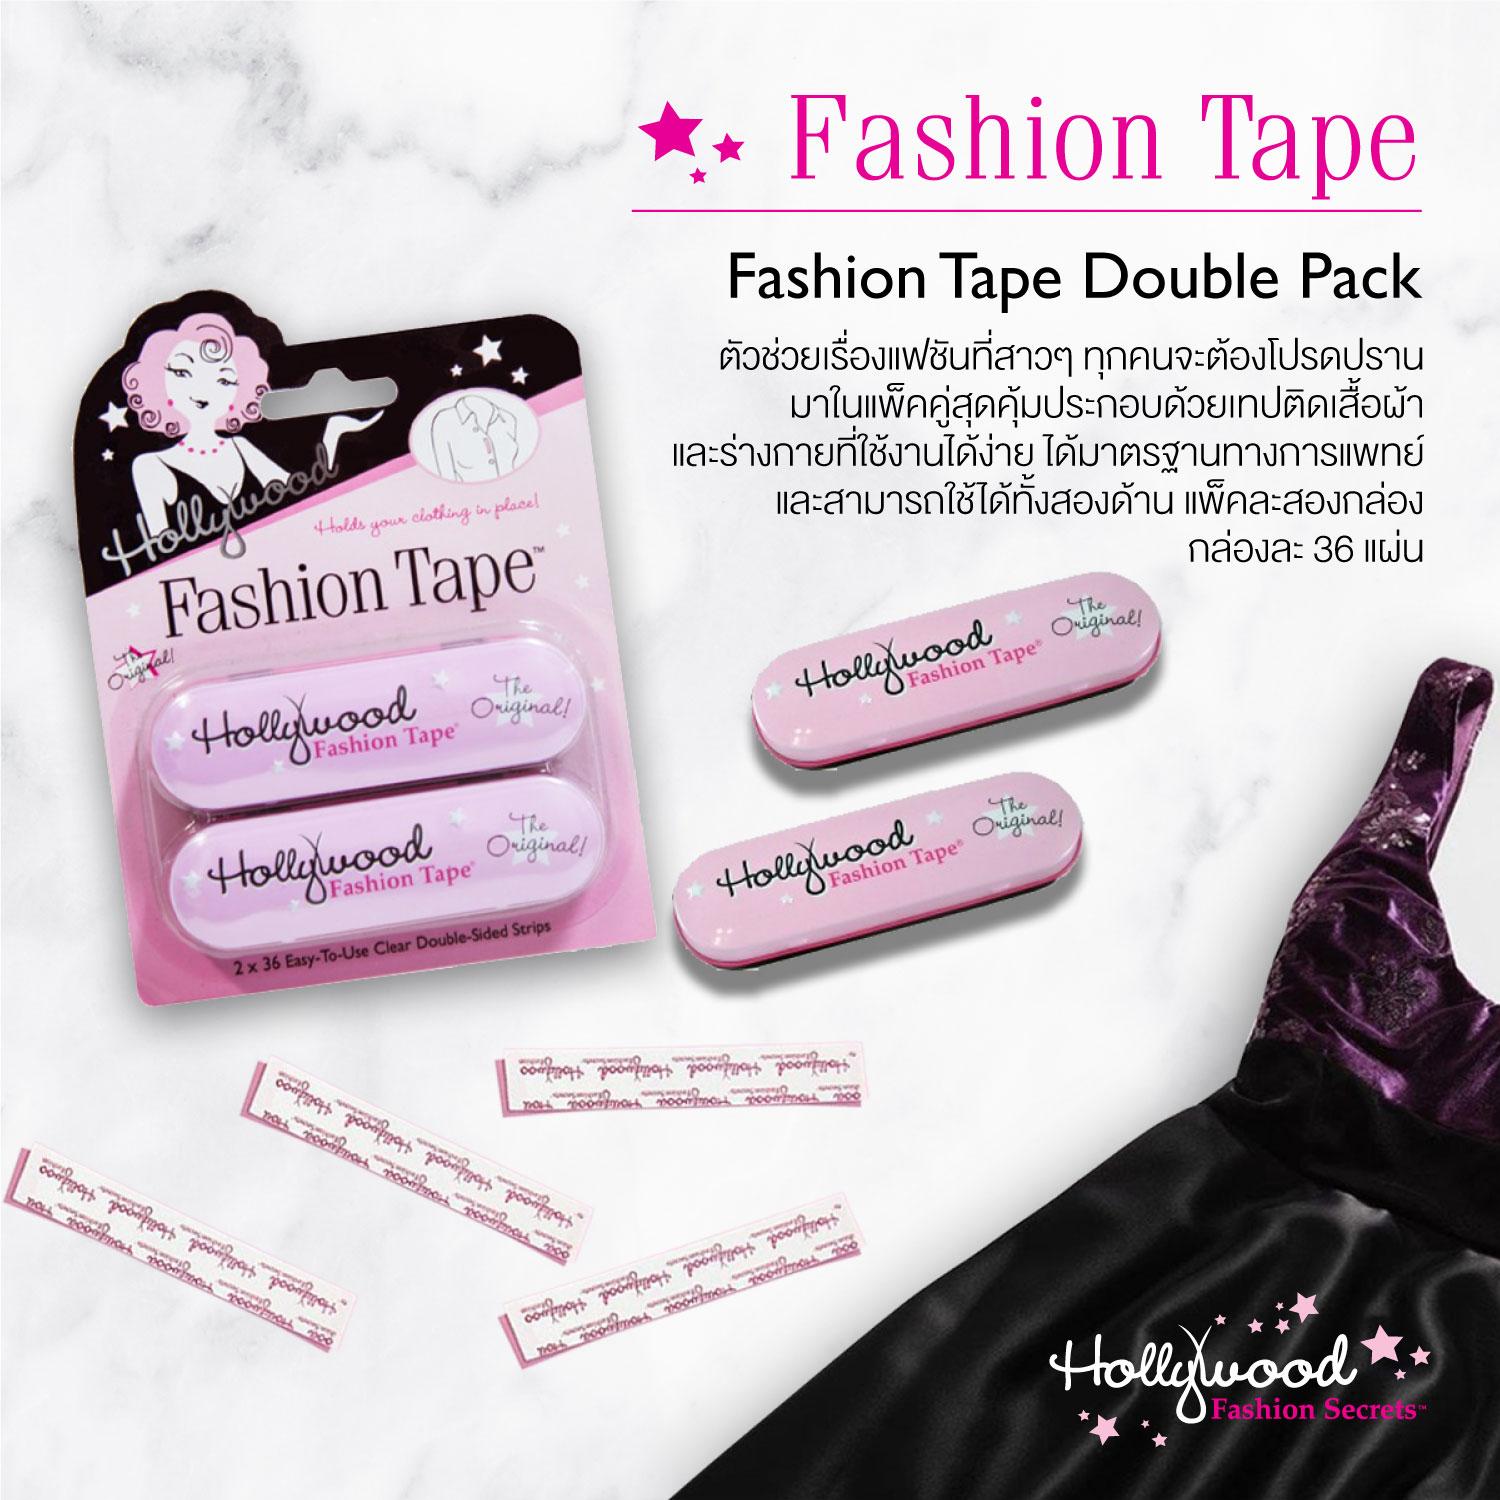 Hollywood Fashion Secrets Tape - Value Pack / เทปติดเสื้อ เทปกันโป๊ เทปติดผิว เทปติดผ้า - แพ๊คคู่สุดคุ้ม - ProfferCompany